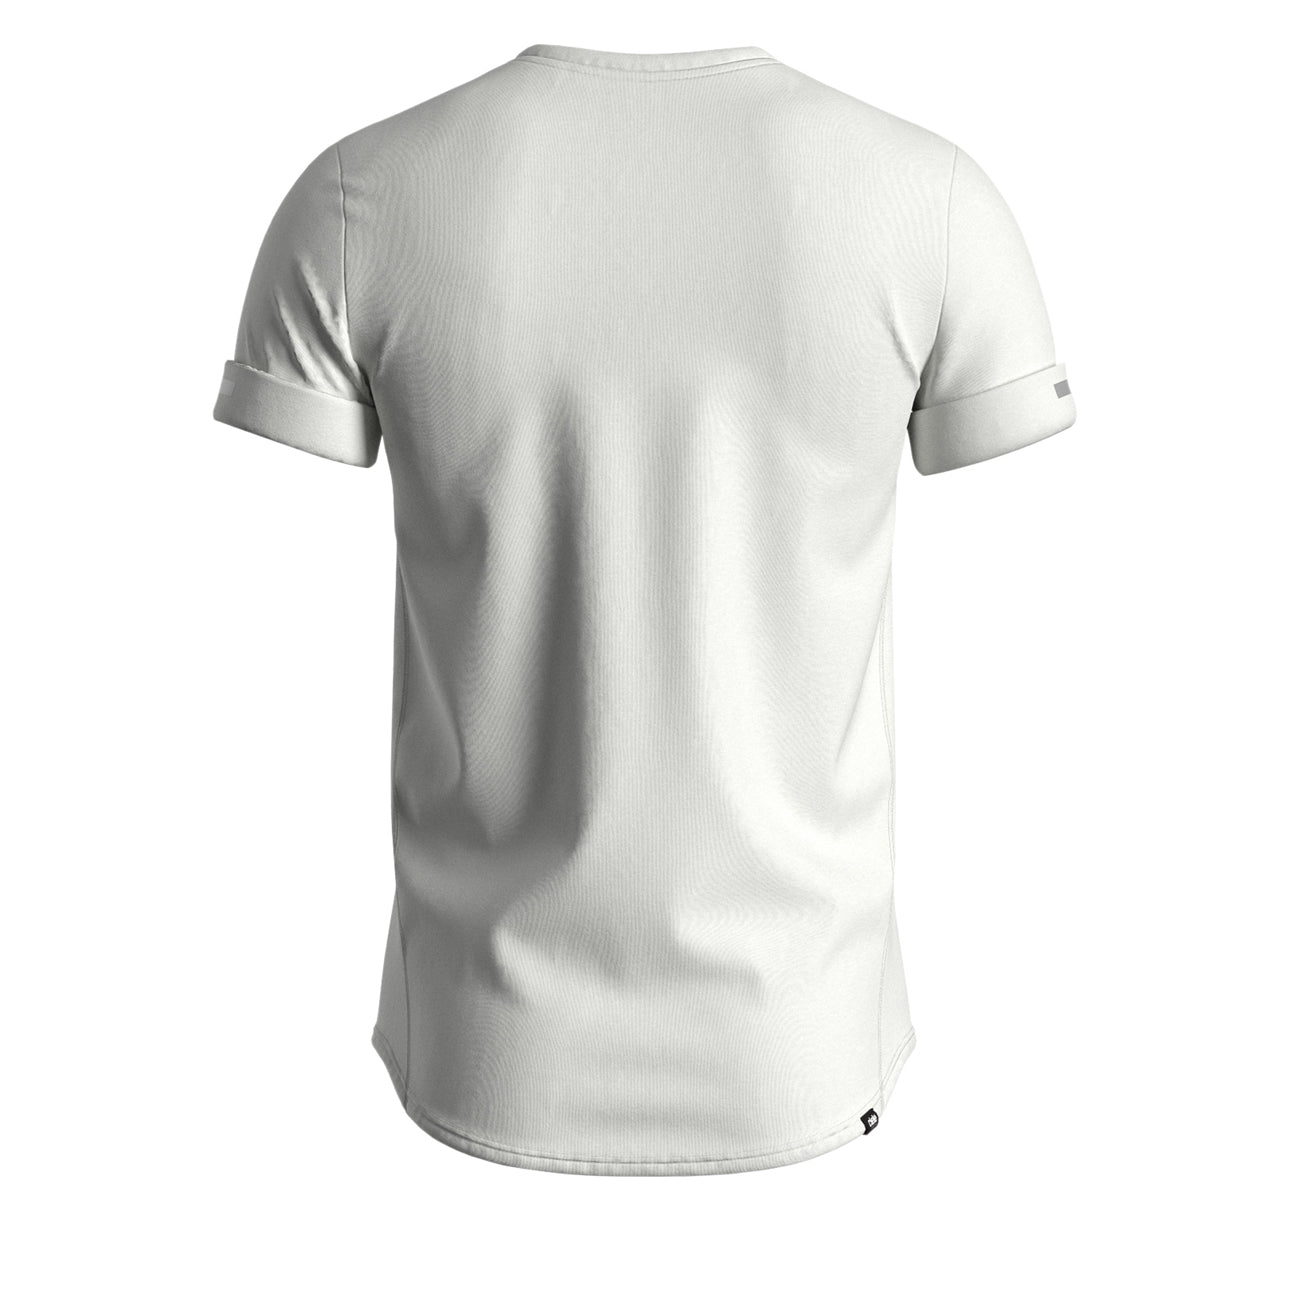 Ciele Athletics NSB T-Shirt Herren Corp R Elemental